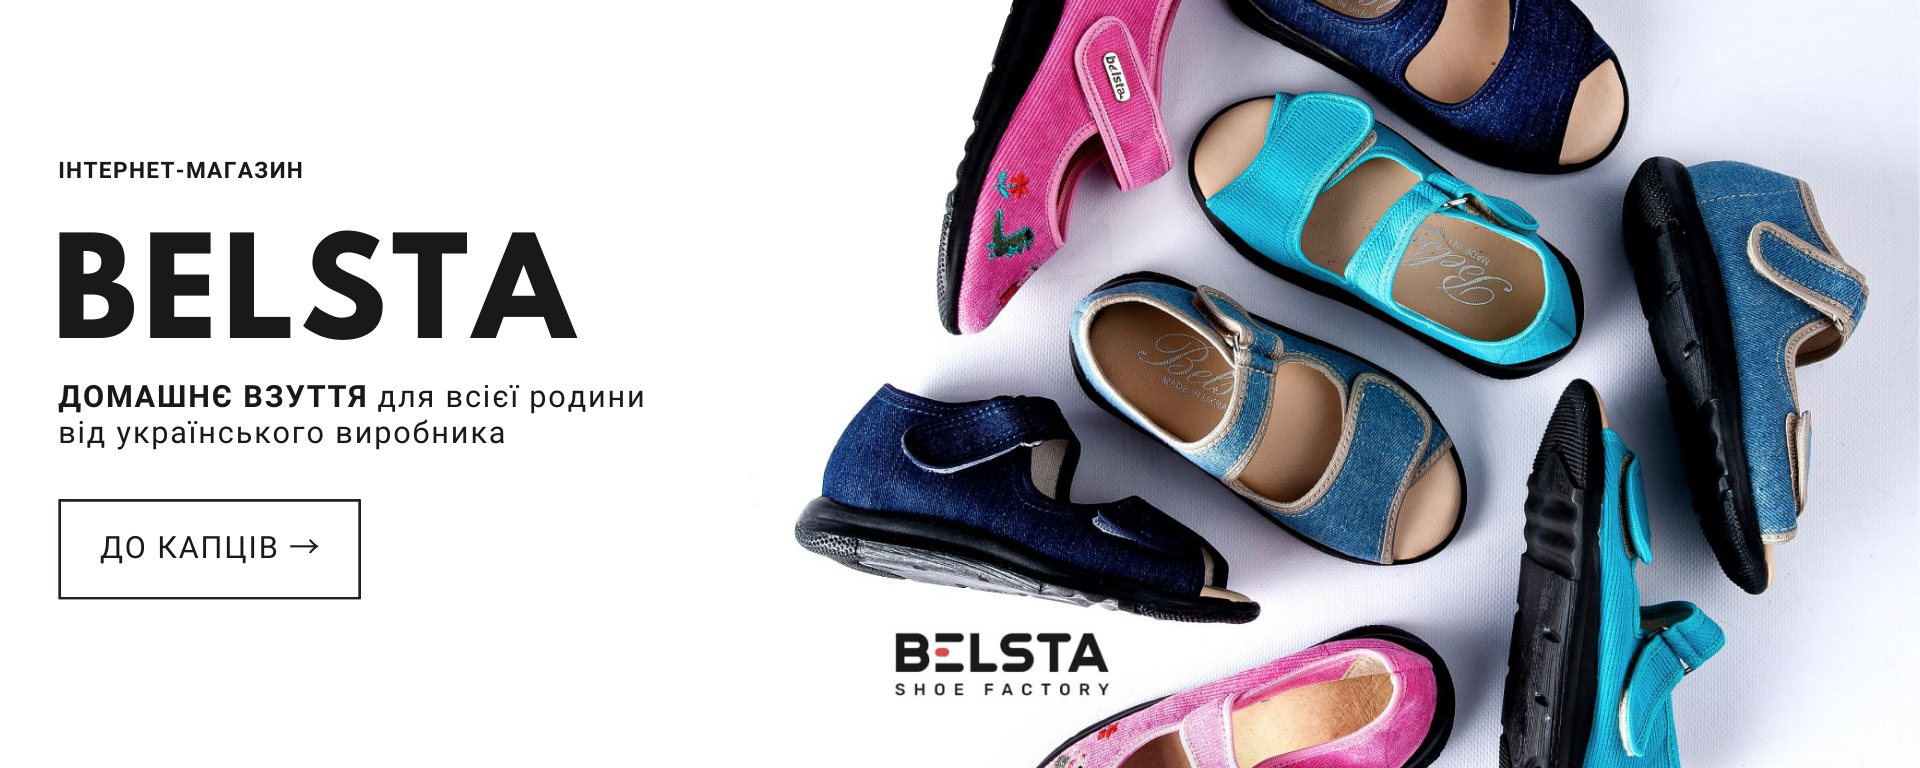 Интернет-магазин обуви БЕЛСТА